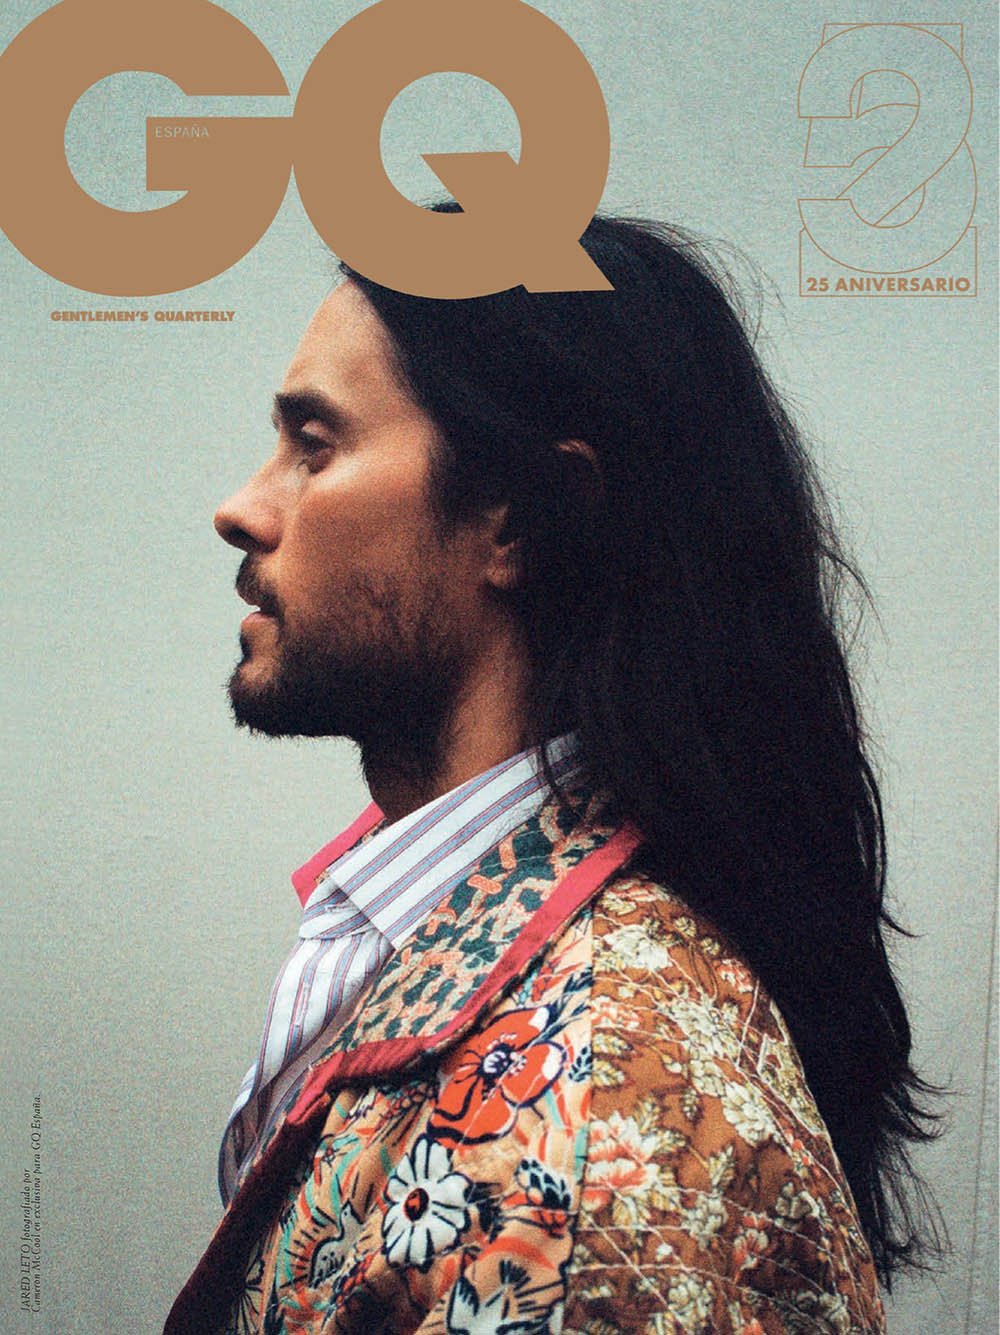 Jared-Leto-covers-GQ-Spain-September-2019-by-Cameron-McCool-1.jpg